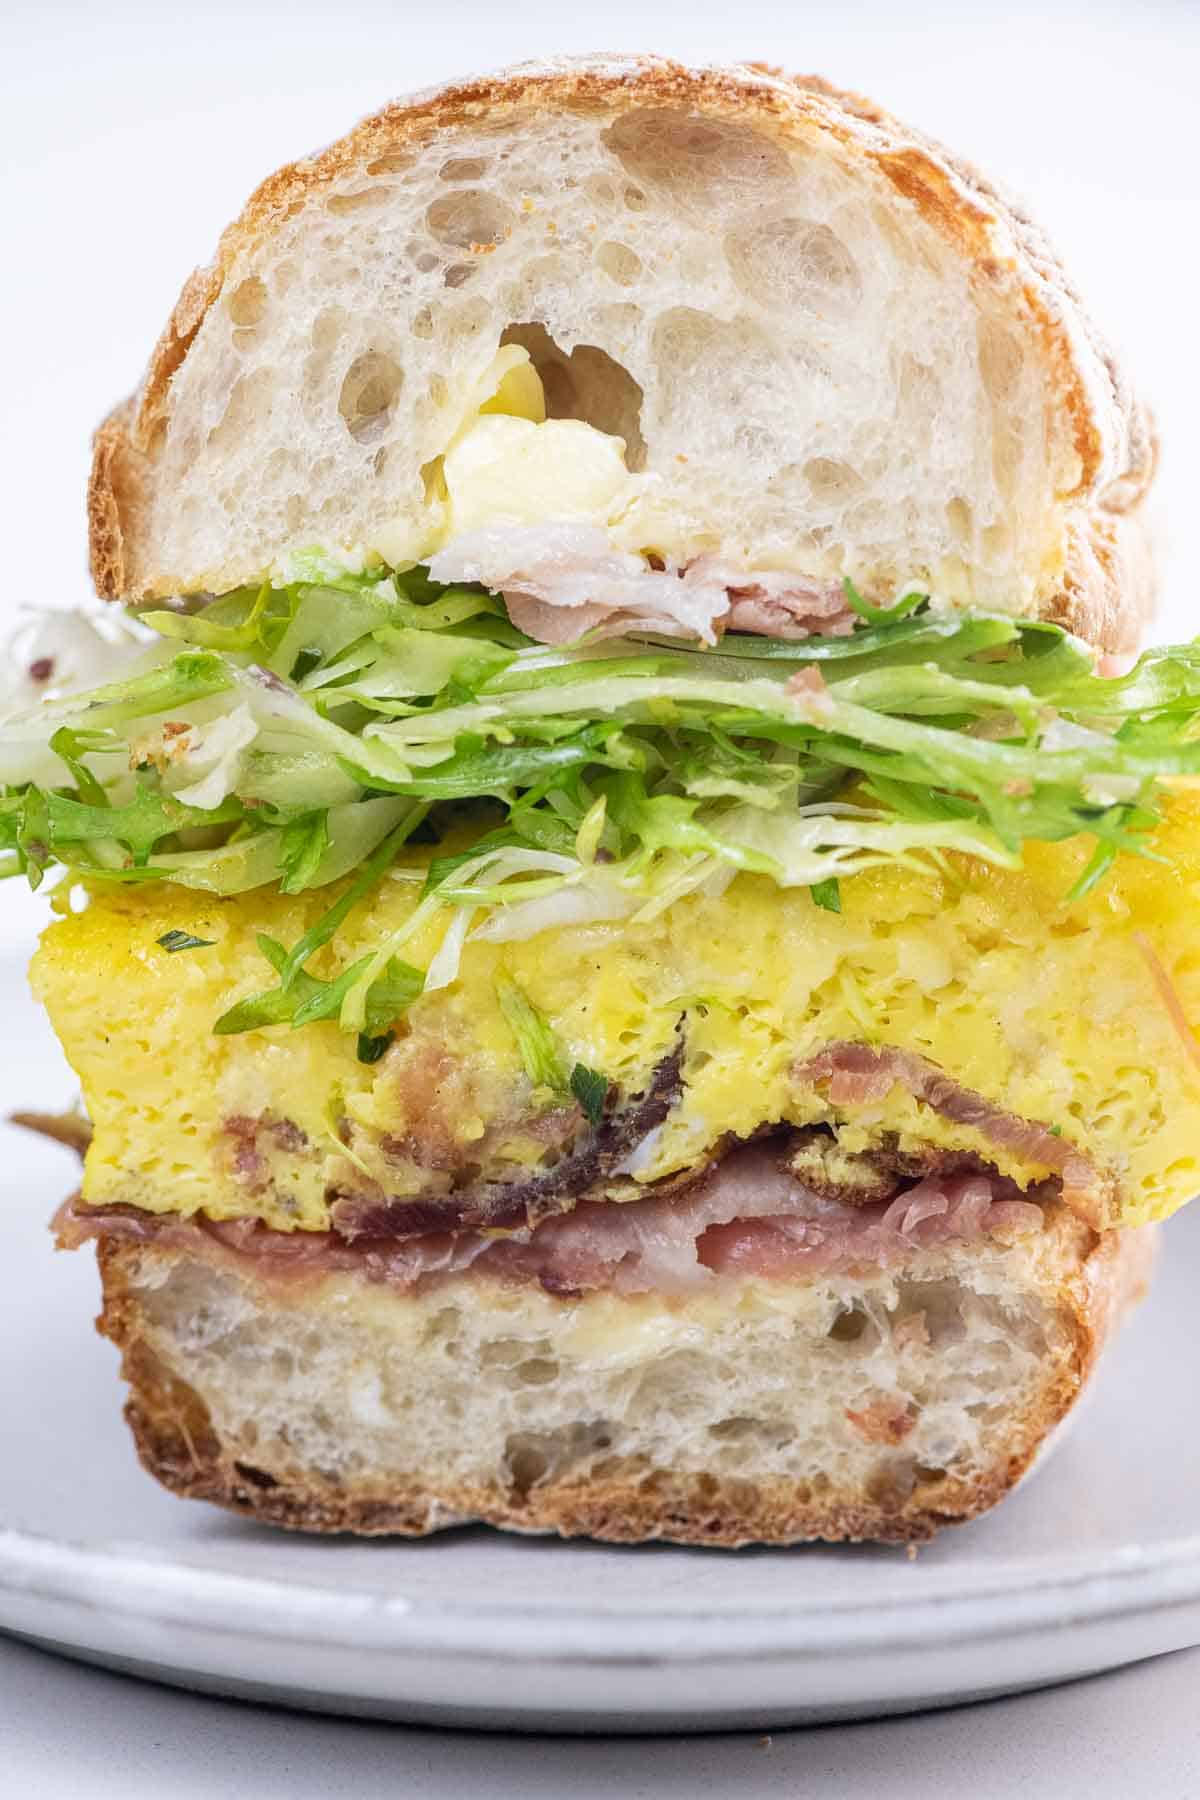 a scrambled egg sandwich on a toasted ciabatta roll